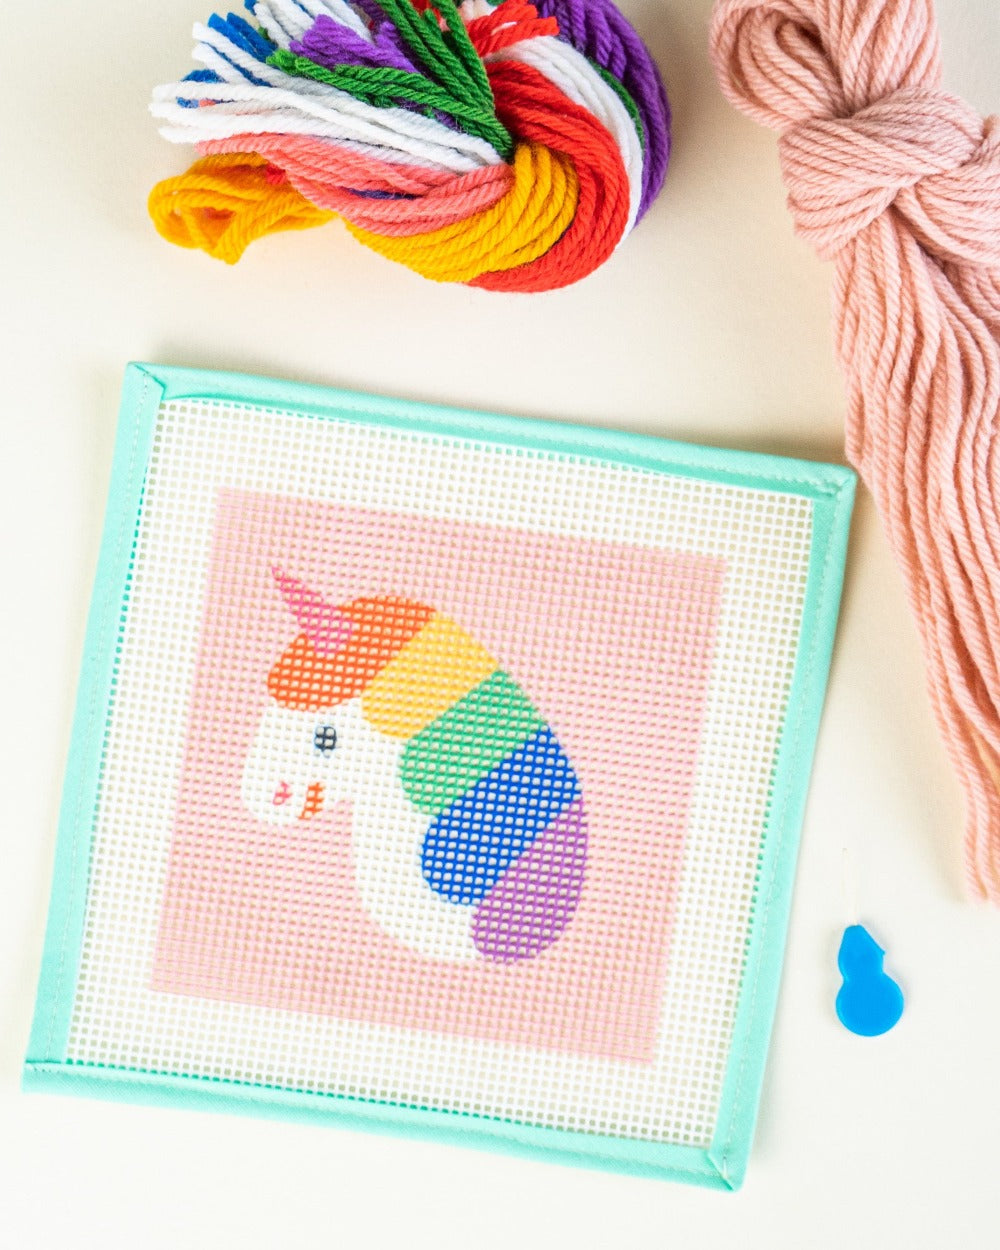 Rainbow Unicorn - Needlepoint Kit for Kids by Unwind Studio